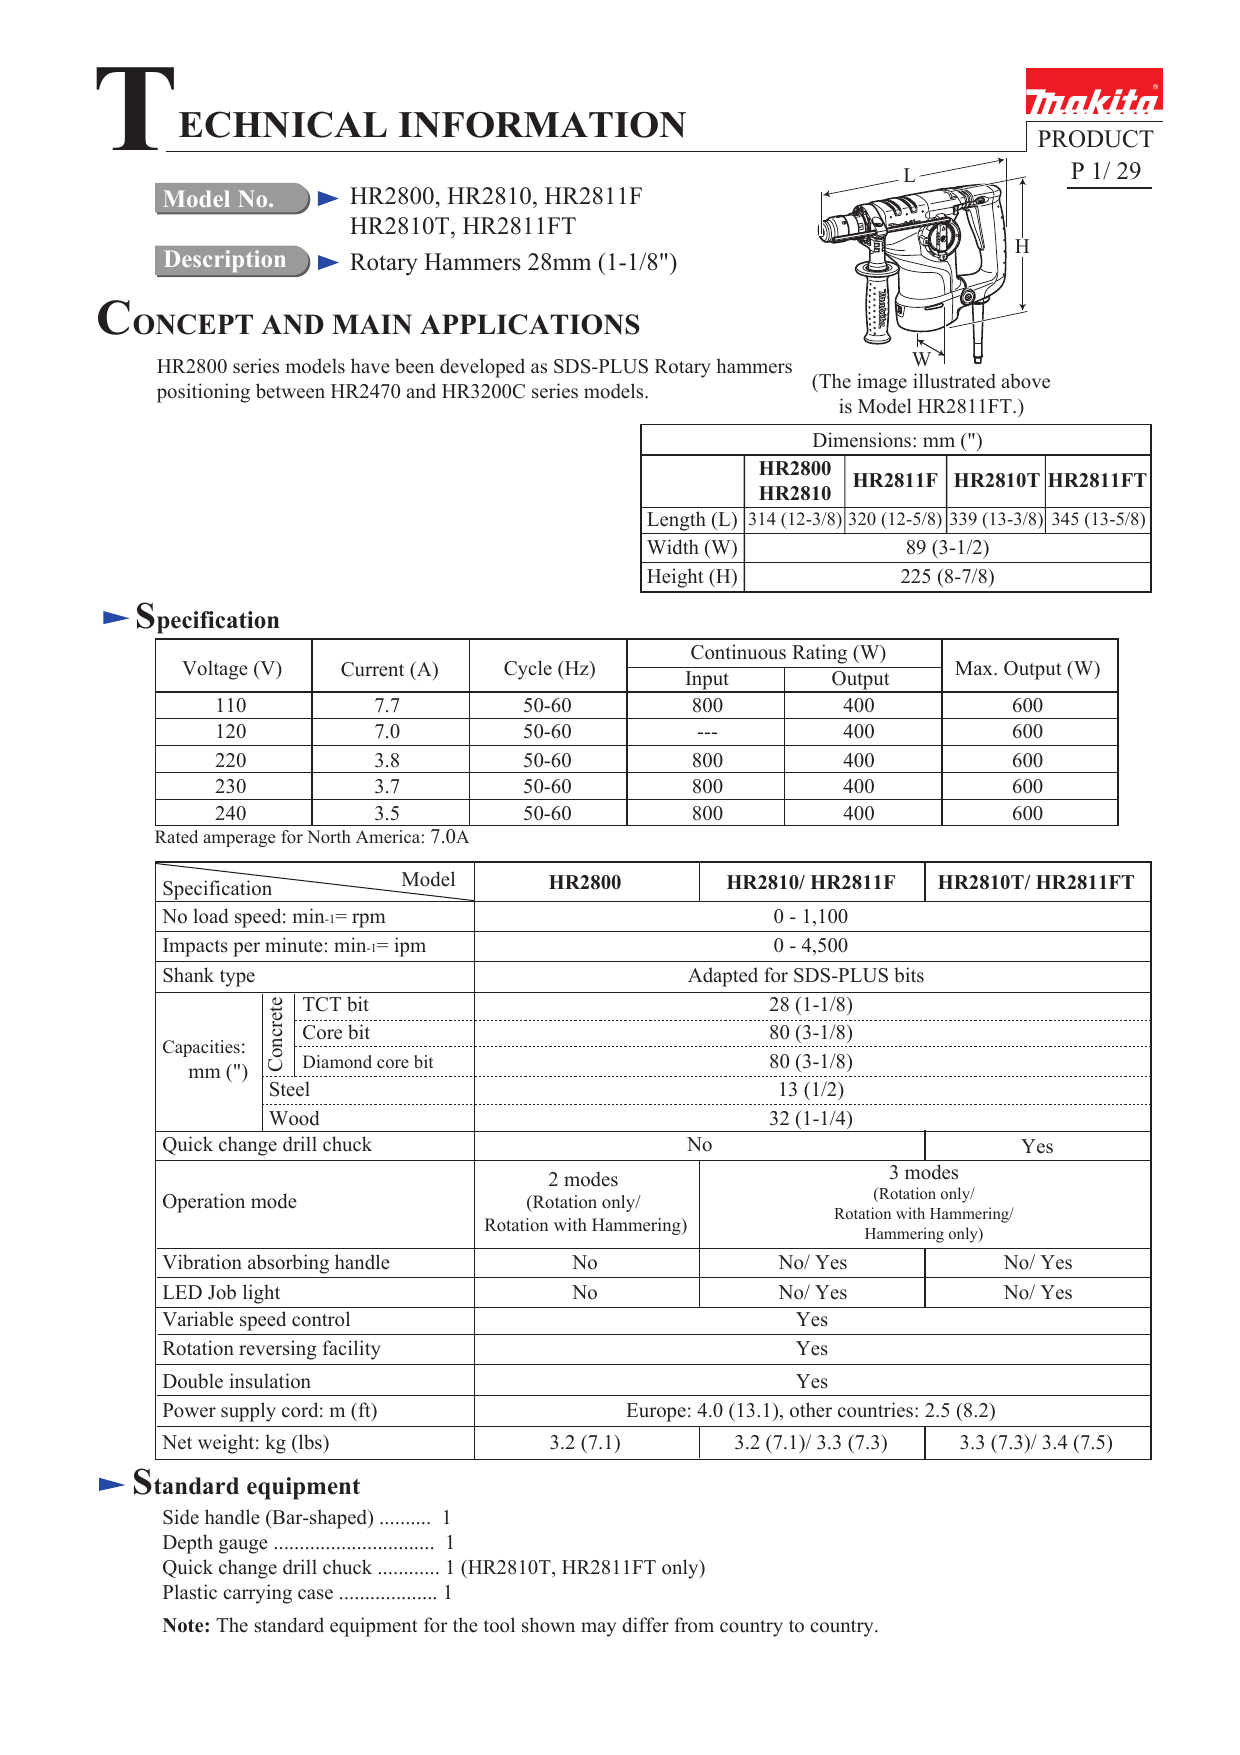 Makita Tool Holder Guide Complete for HR2800 HR2811F HR2810 158285-3 123191-1 